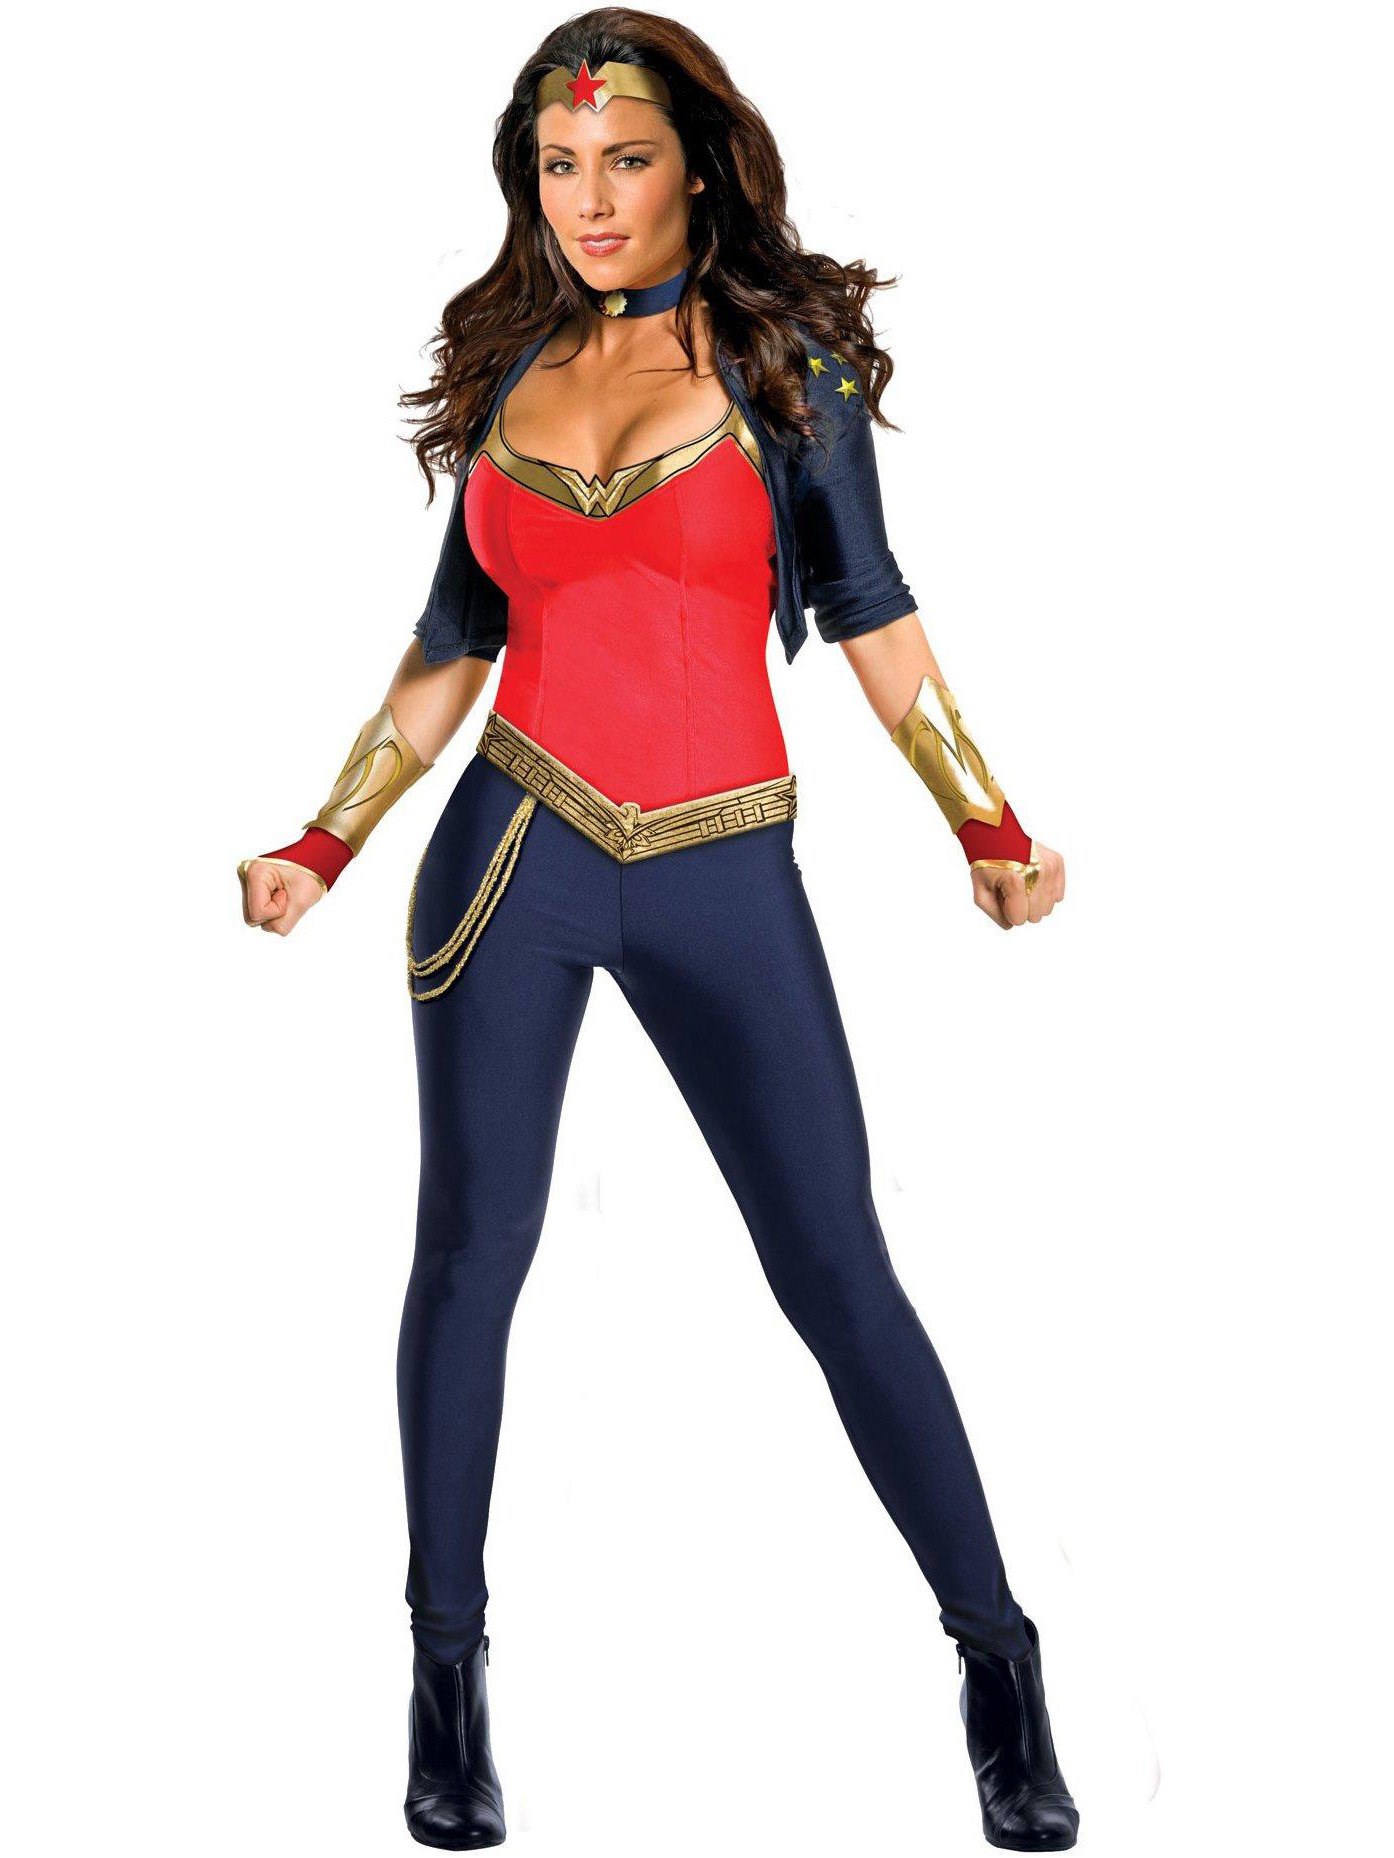  Woman Halloween Costumes on Wonder Woman Deluxe Adult Costume Includes Pants Top Jacket Belt Tiara